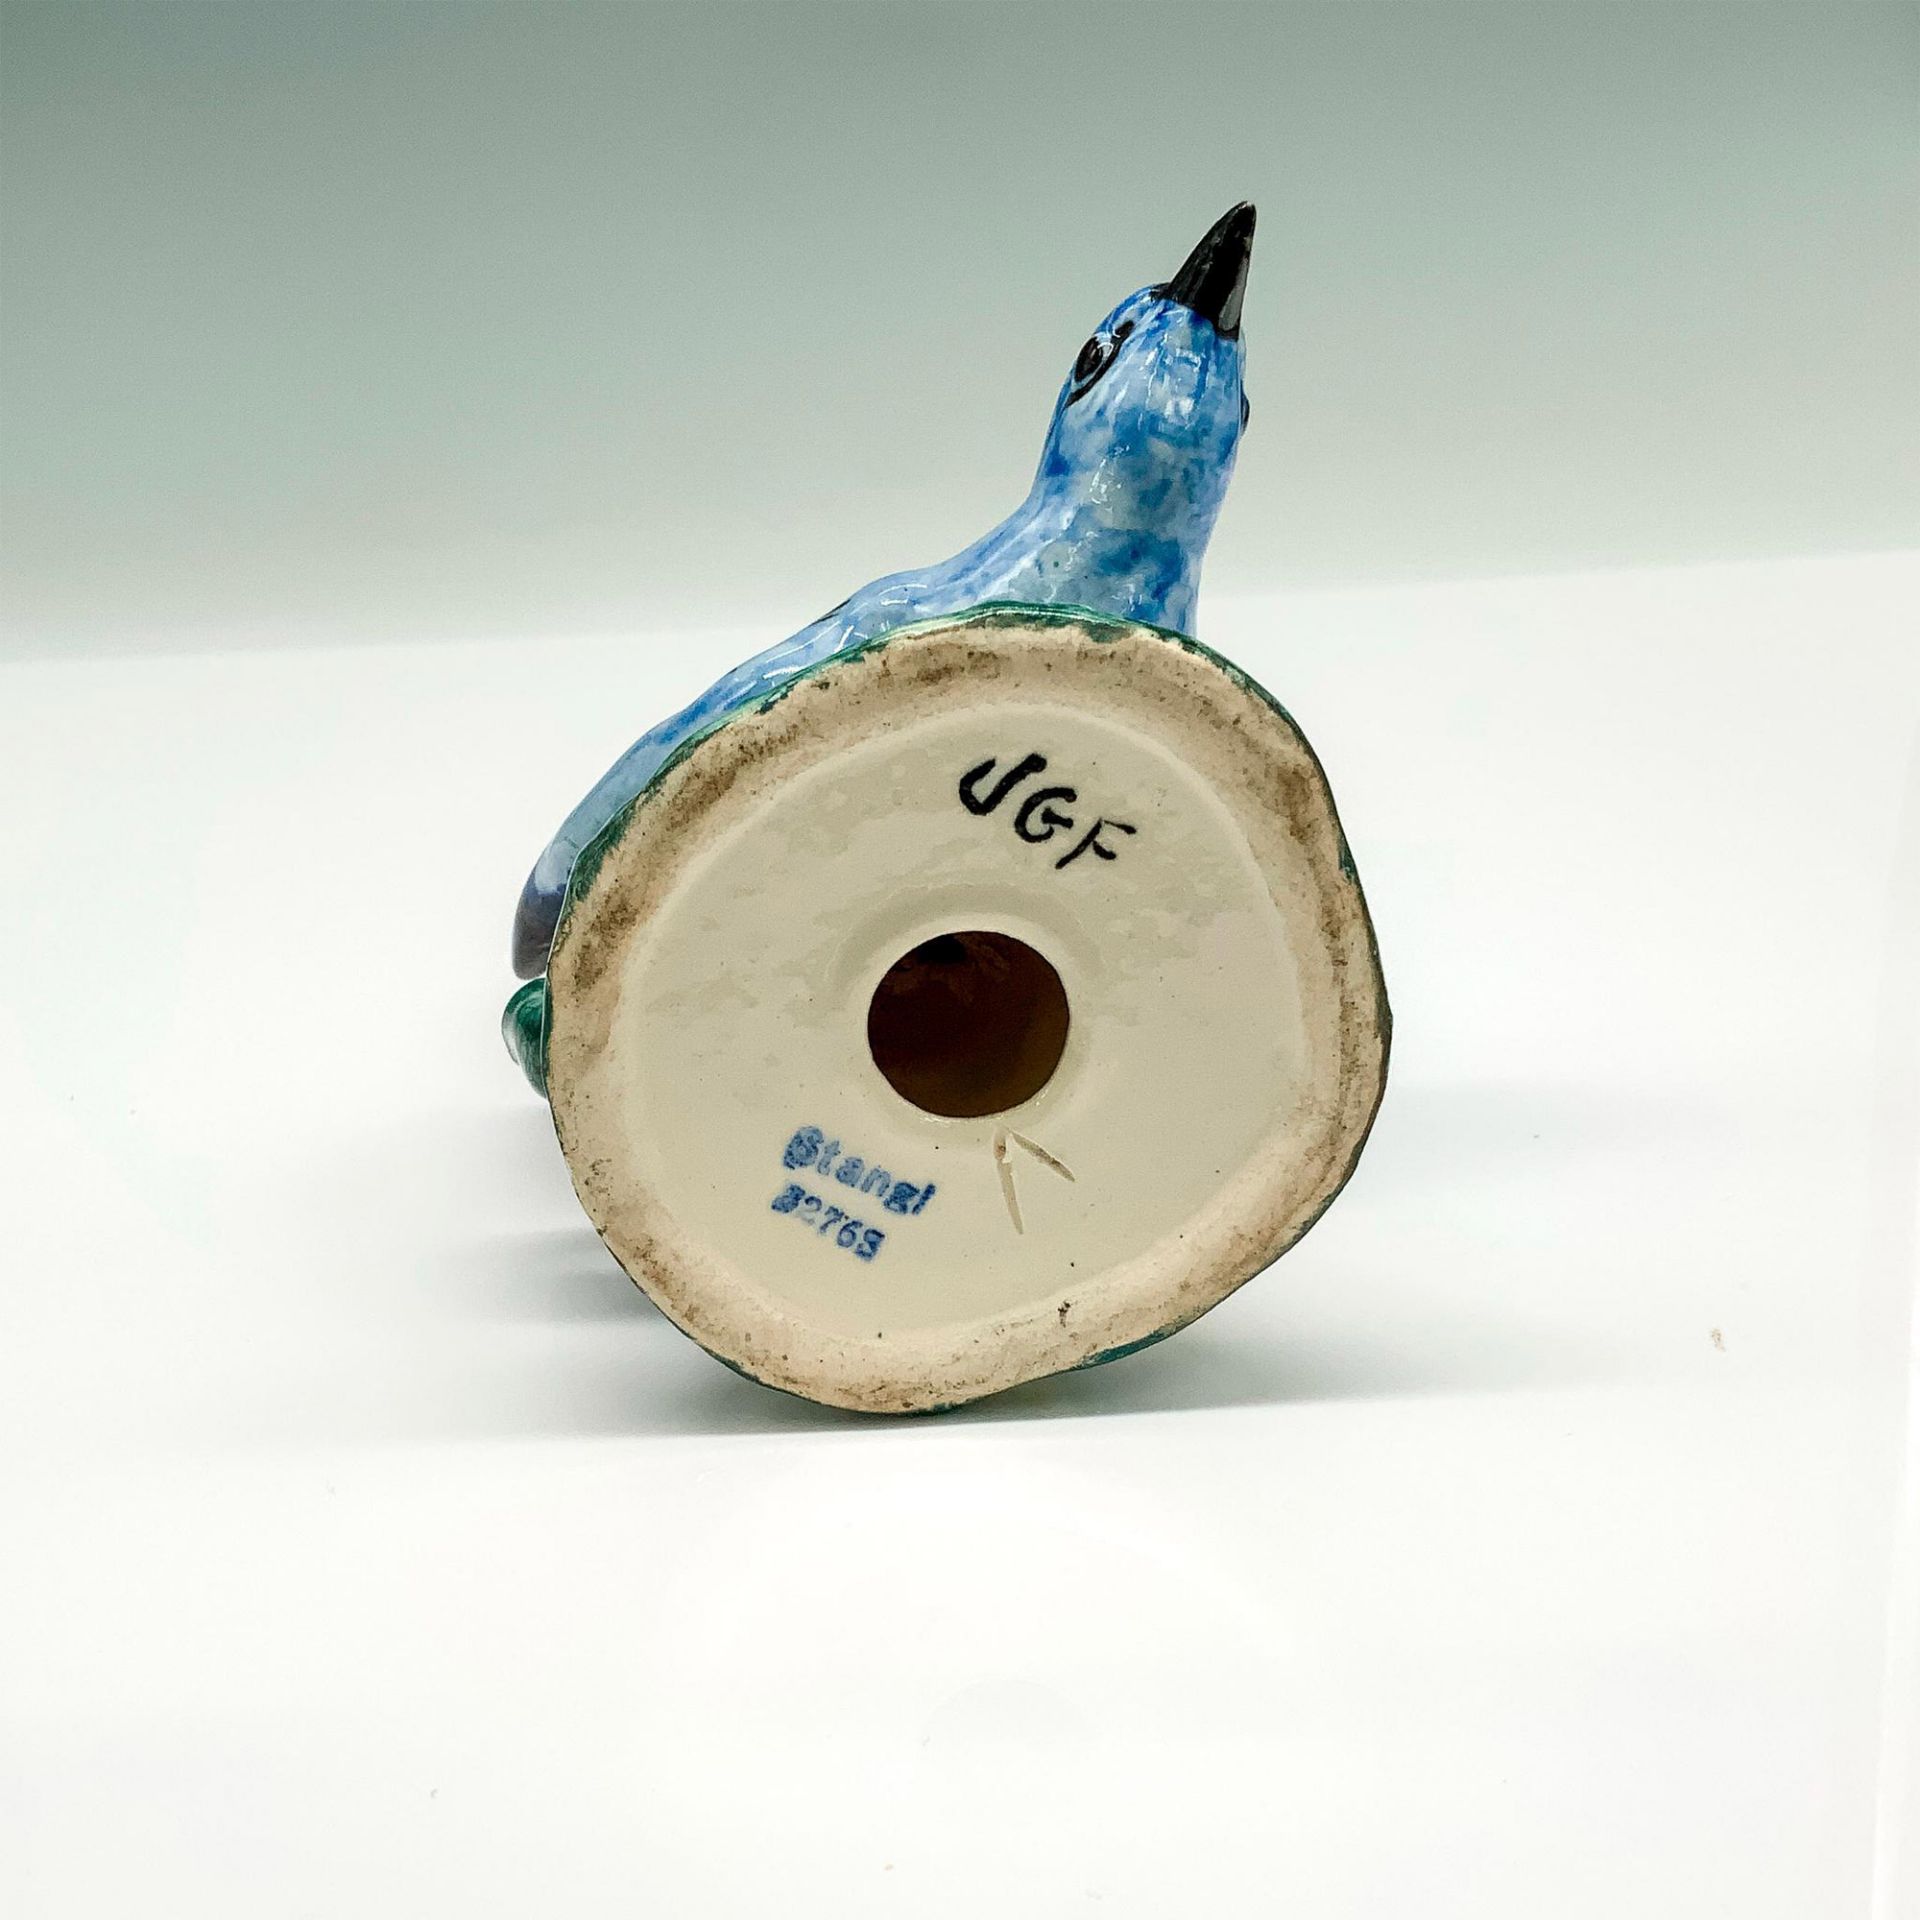 Stangl Pottery Bird Figurine, Blue Bird 3276 - Image 5 of 5